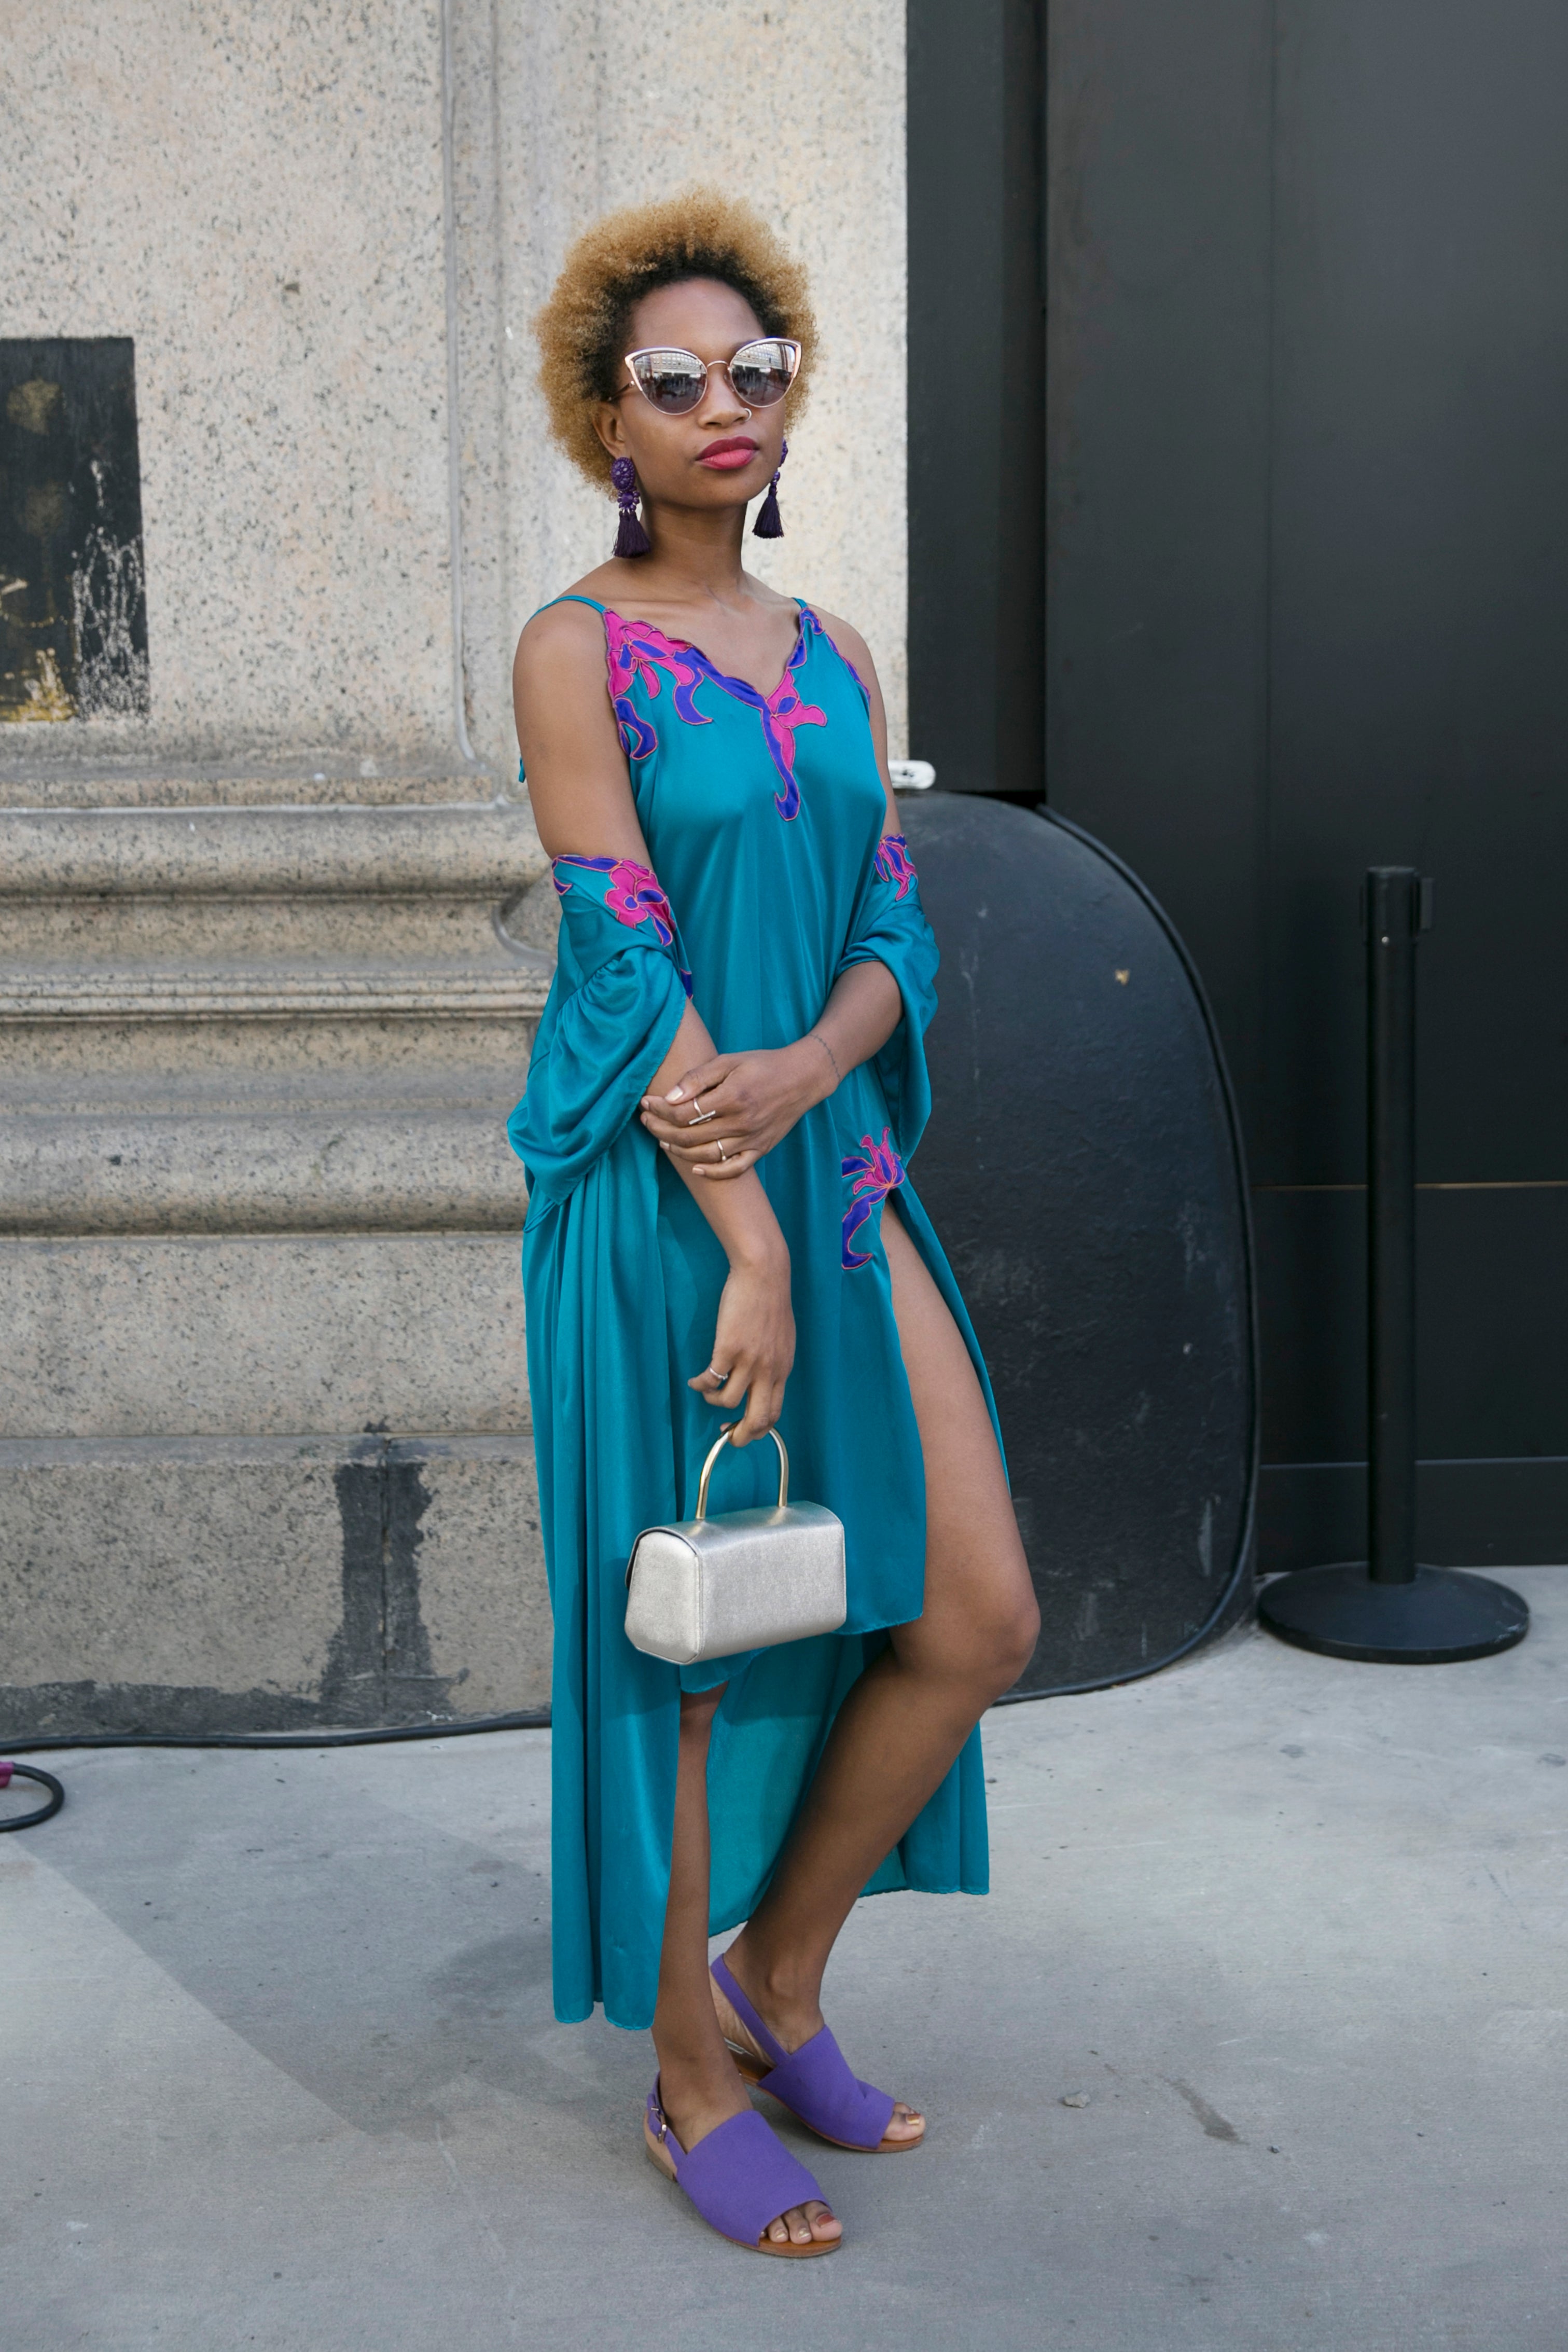 Black Girls Killing It at New York Fashion Week
